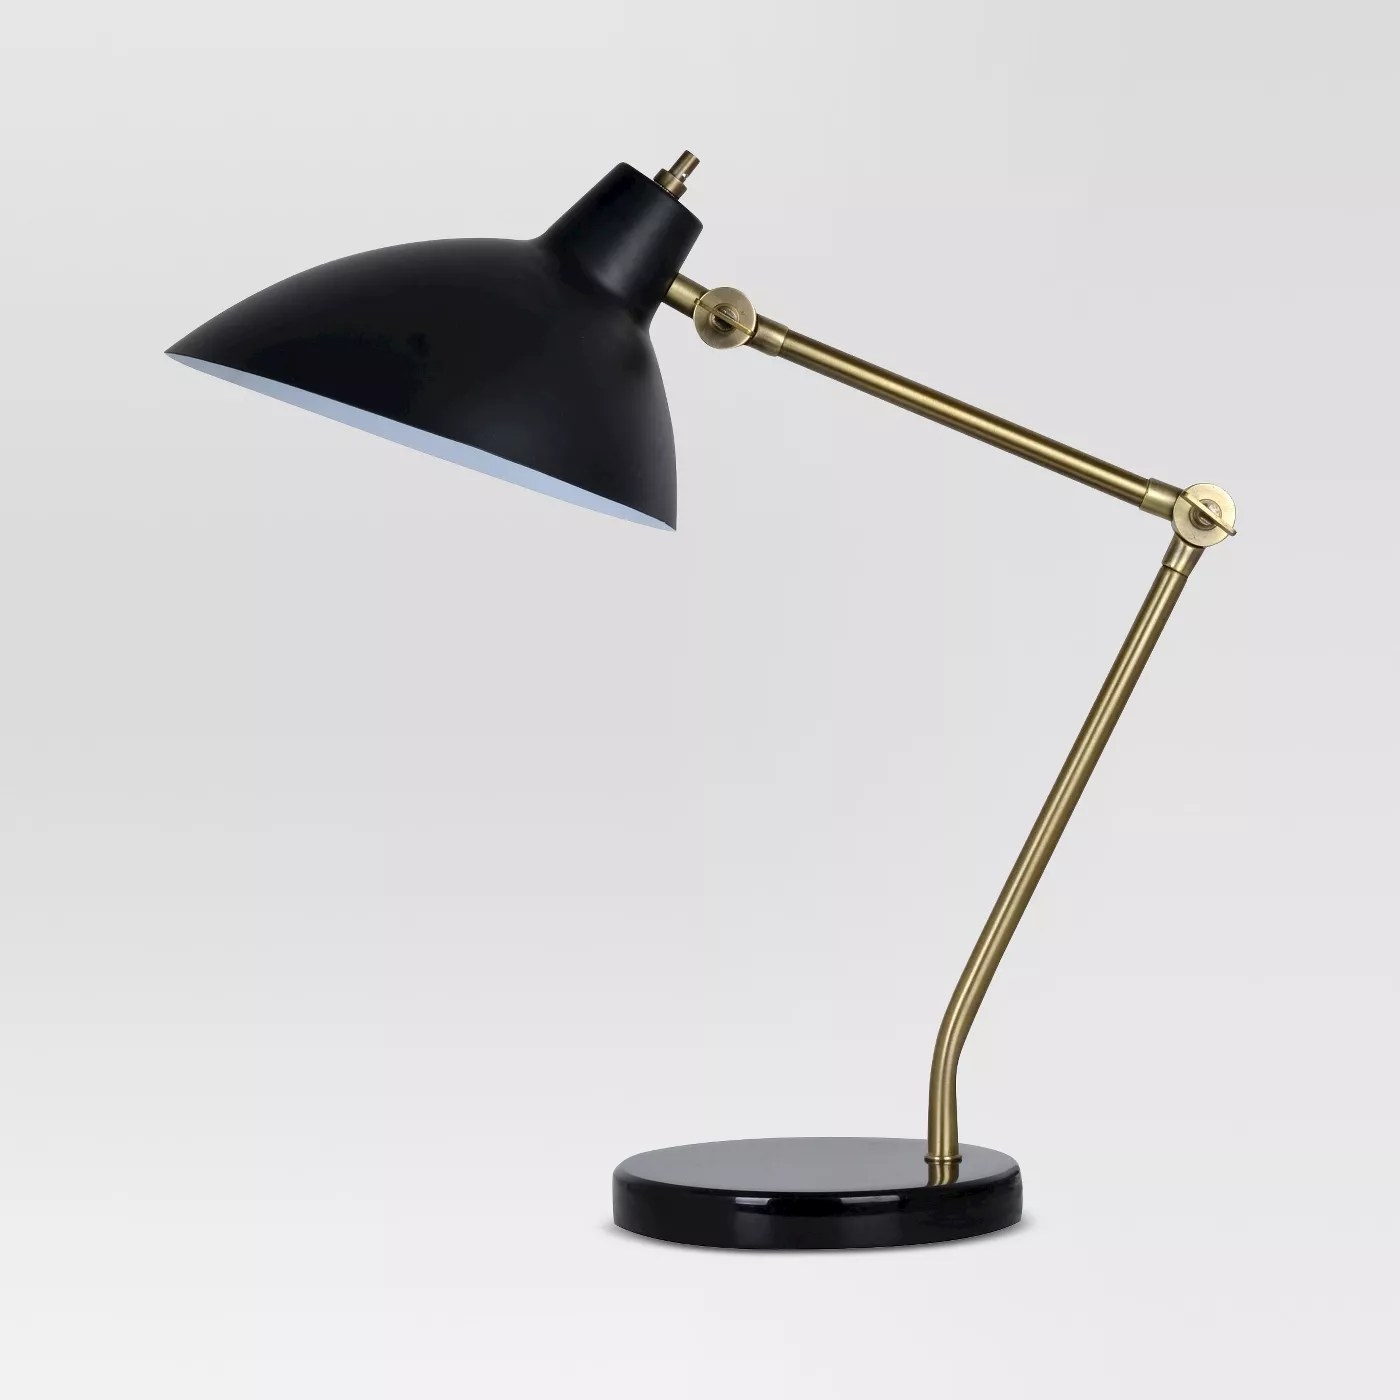 Black and gold desk lamp